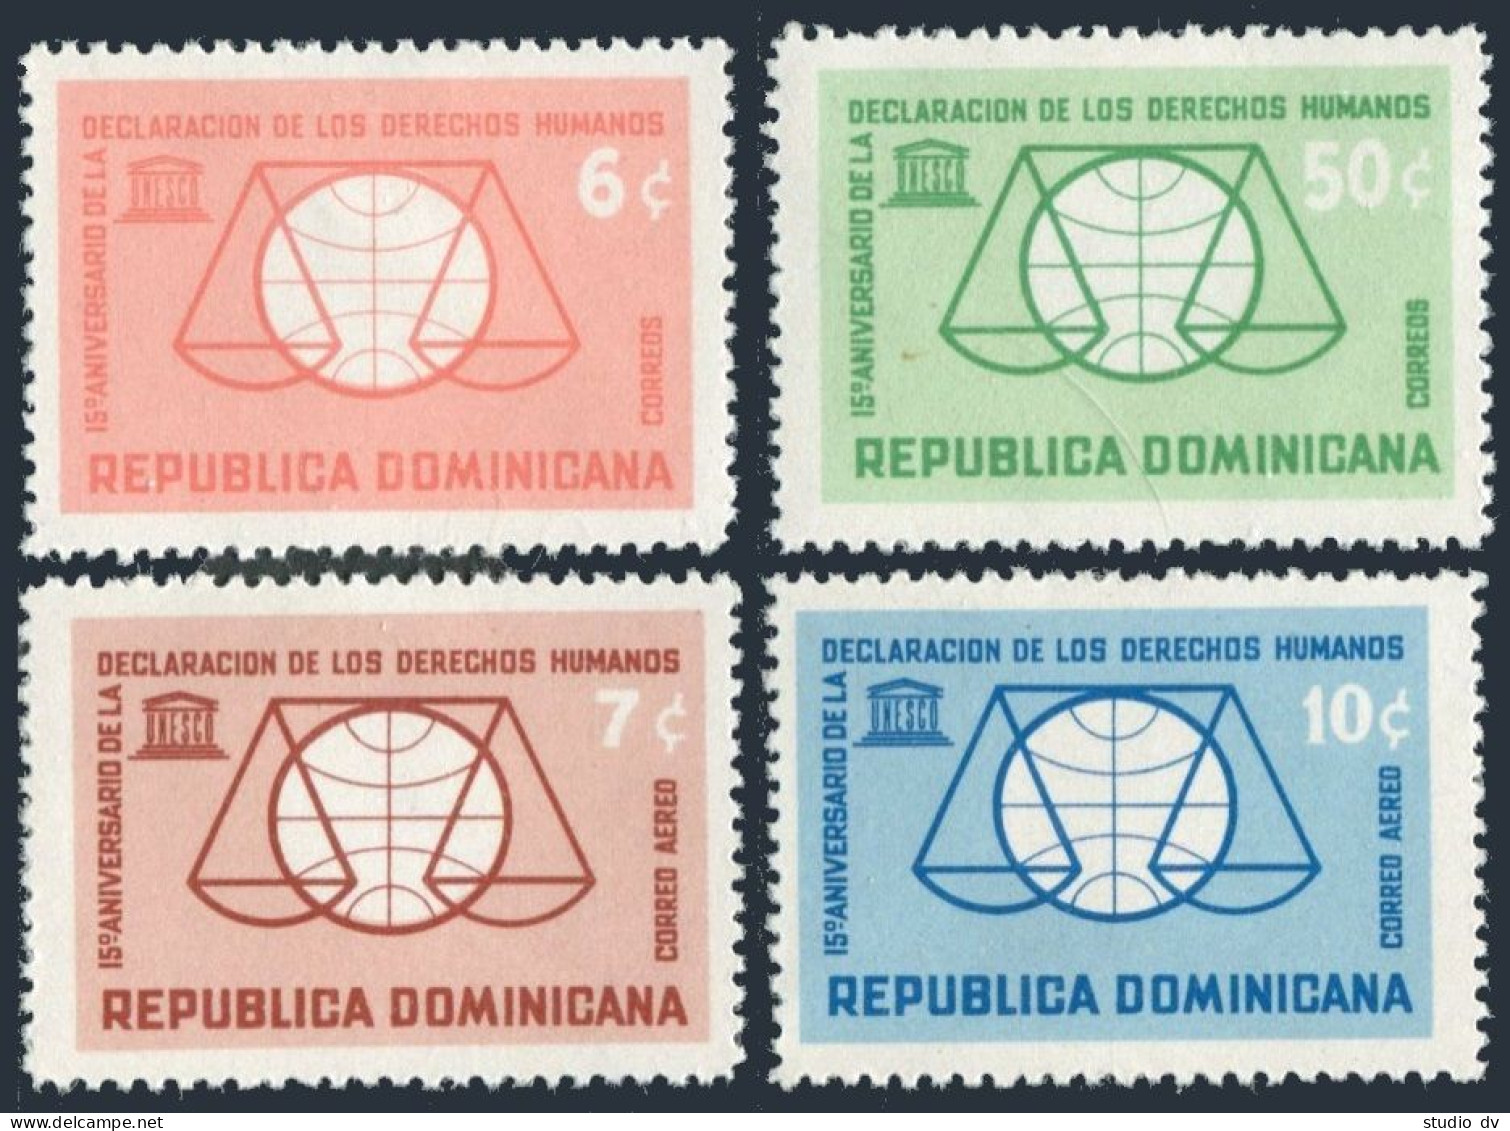 Dominican Rep 589-590,C130-C131,MNH.Mi 814-817. Declaration Of Human Rights,1963 - Dominikanische Rep.